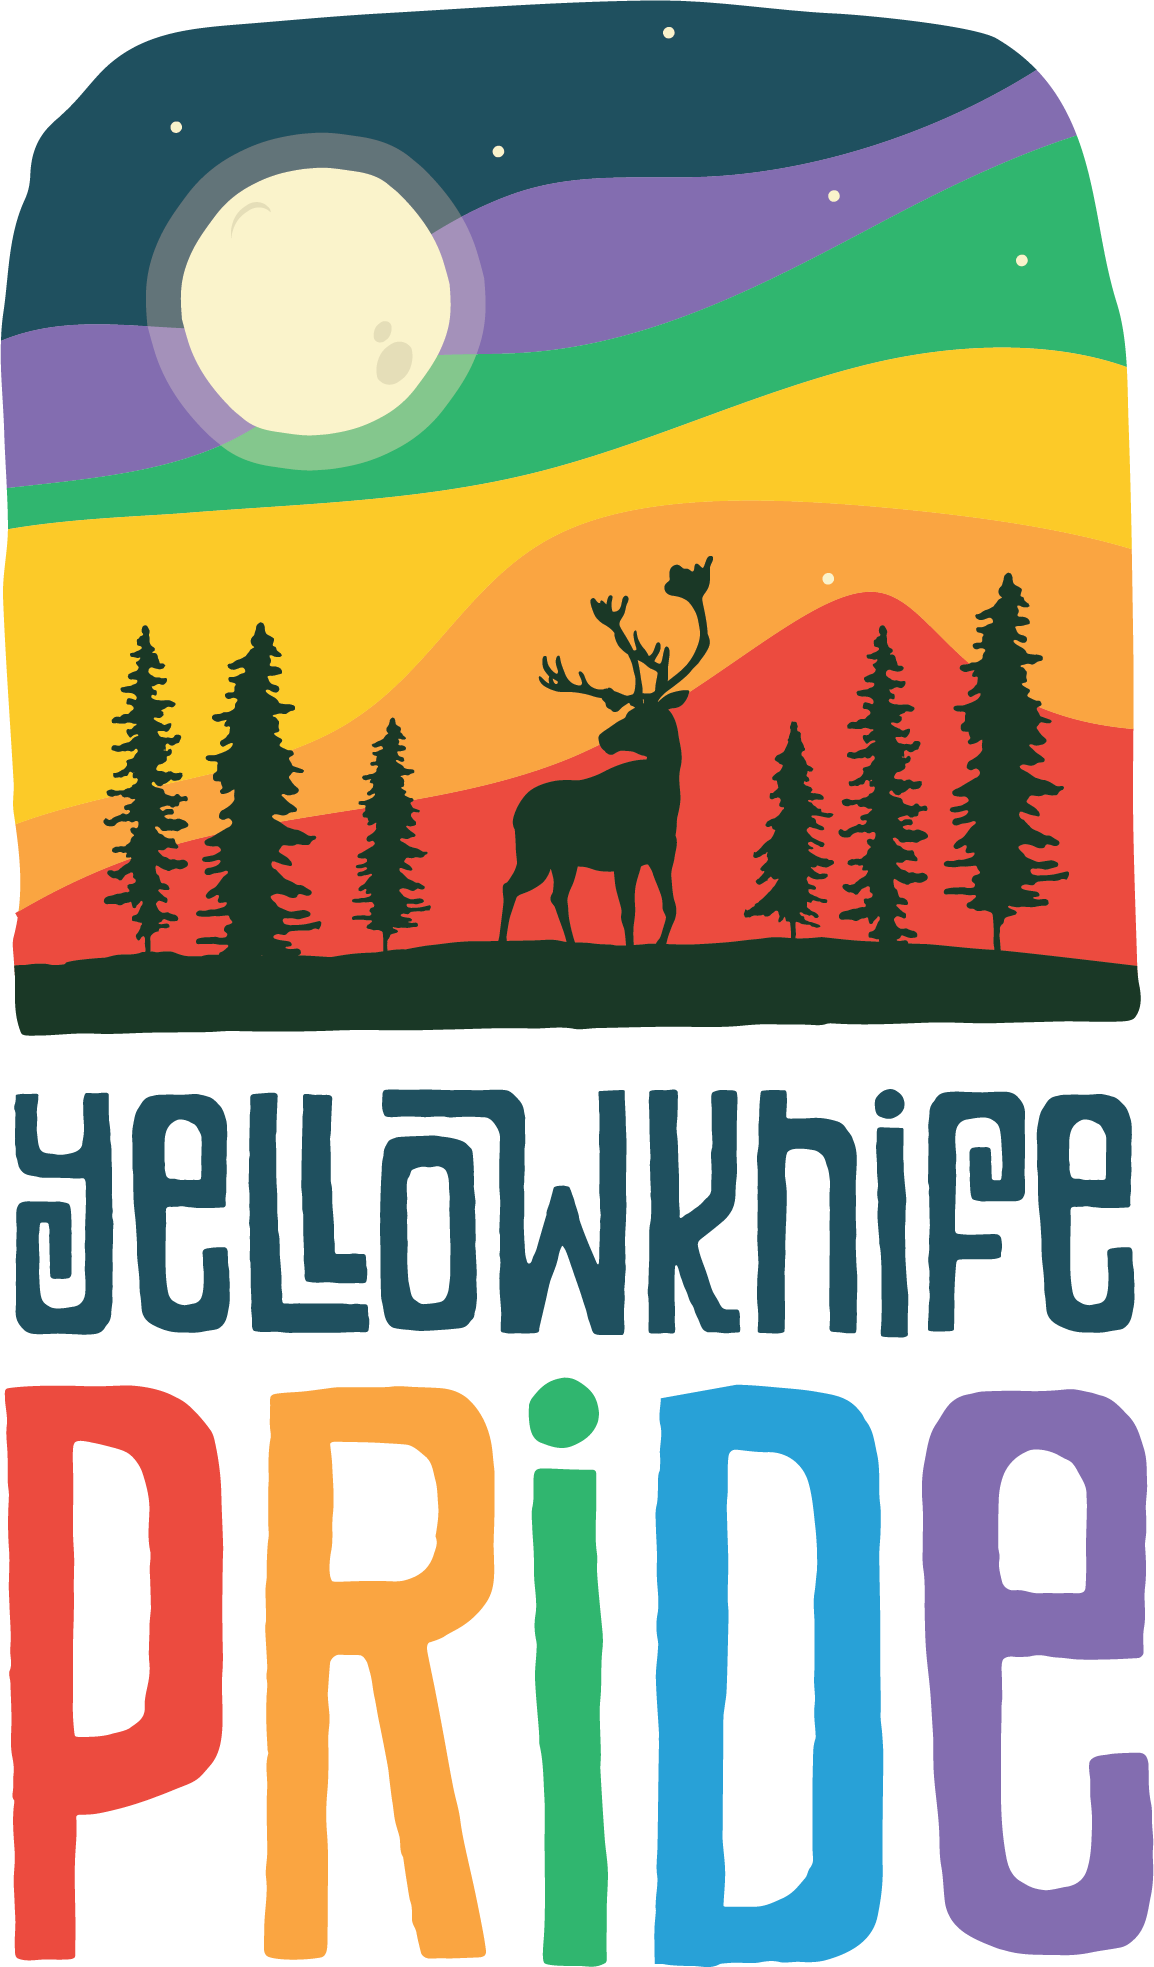 Yellowknife Pride 2023